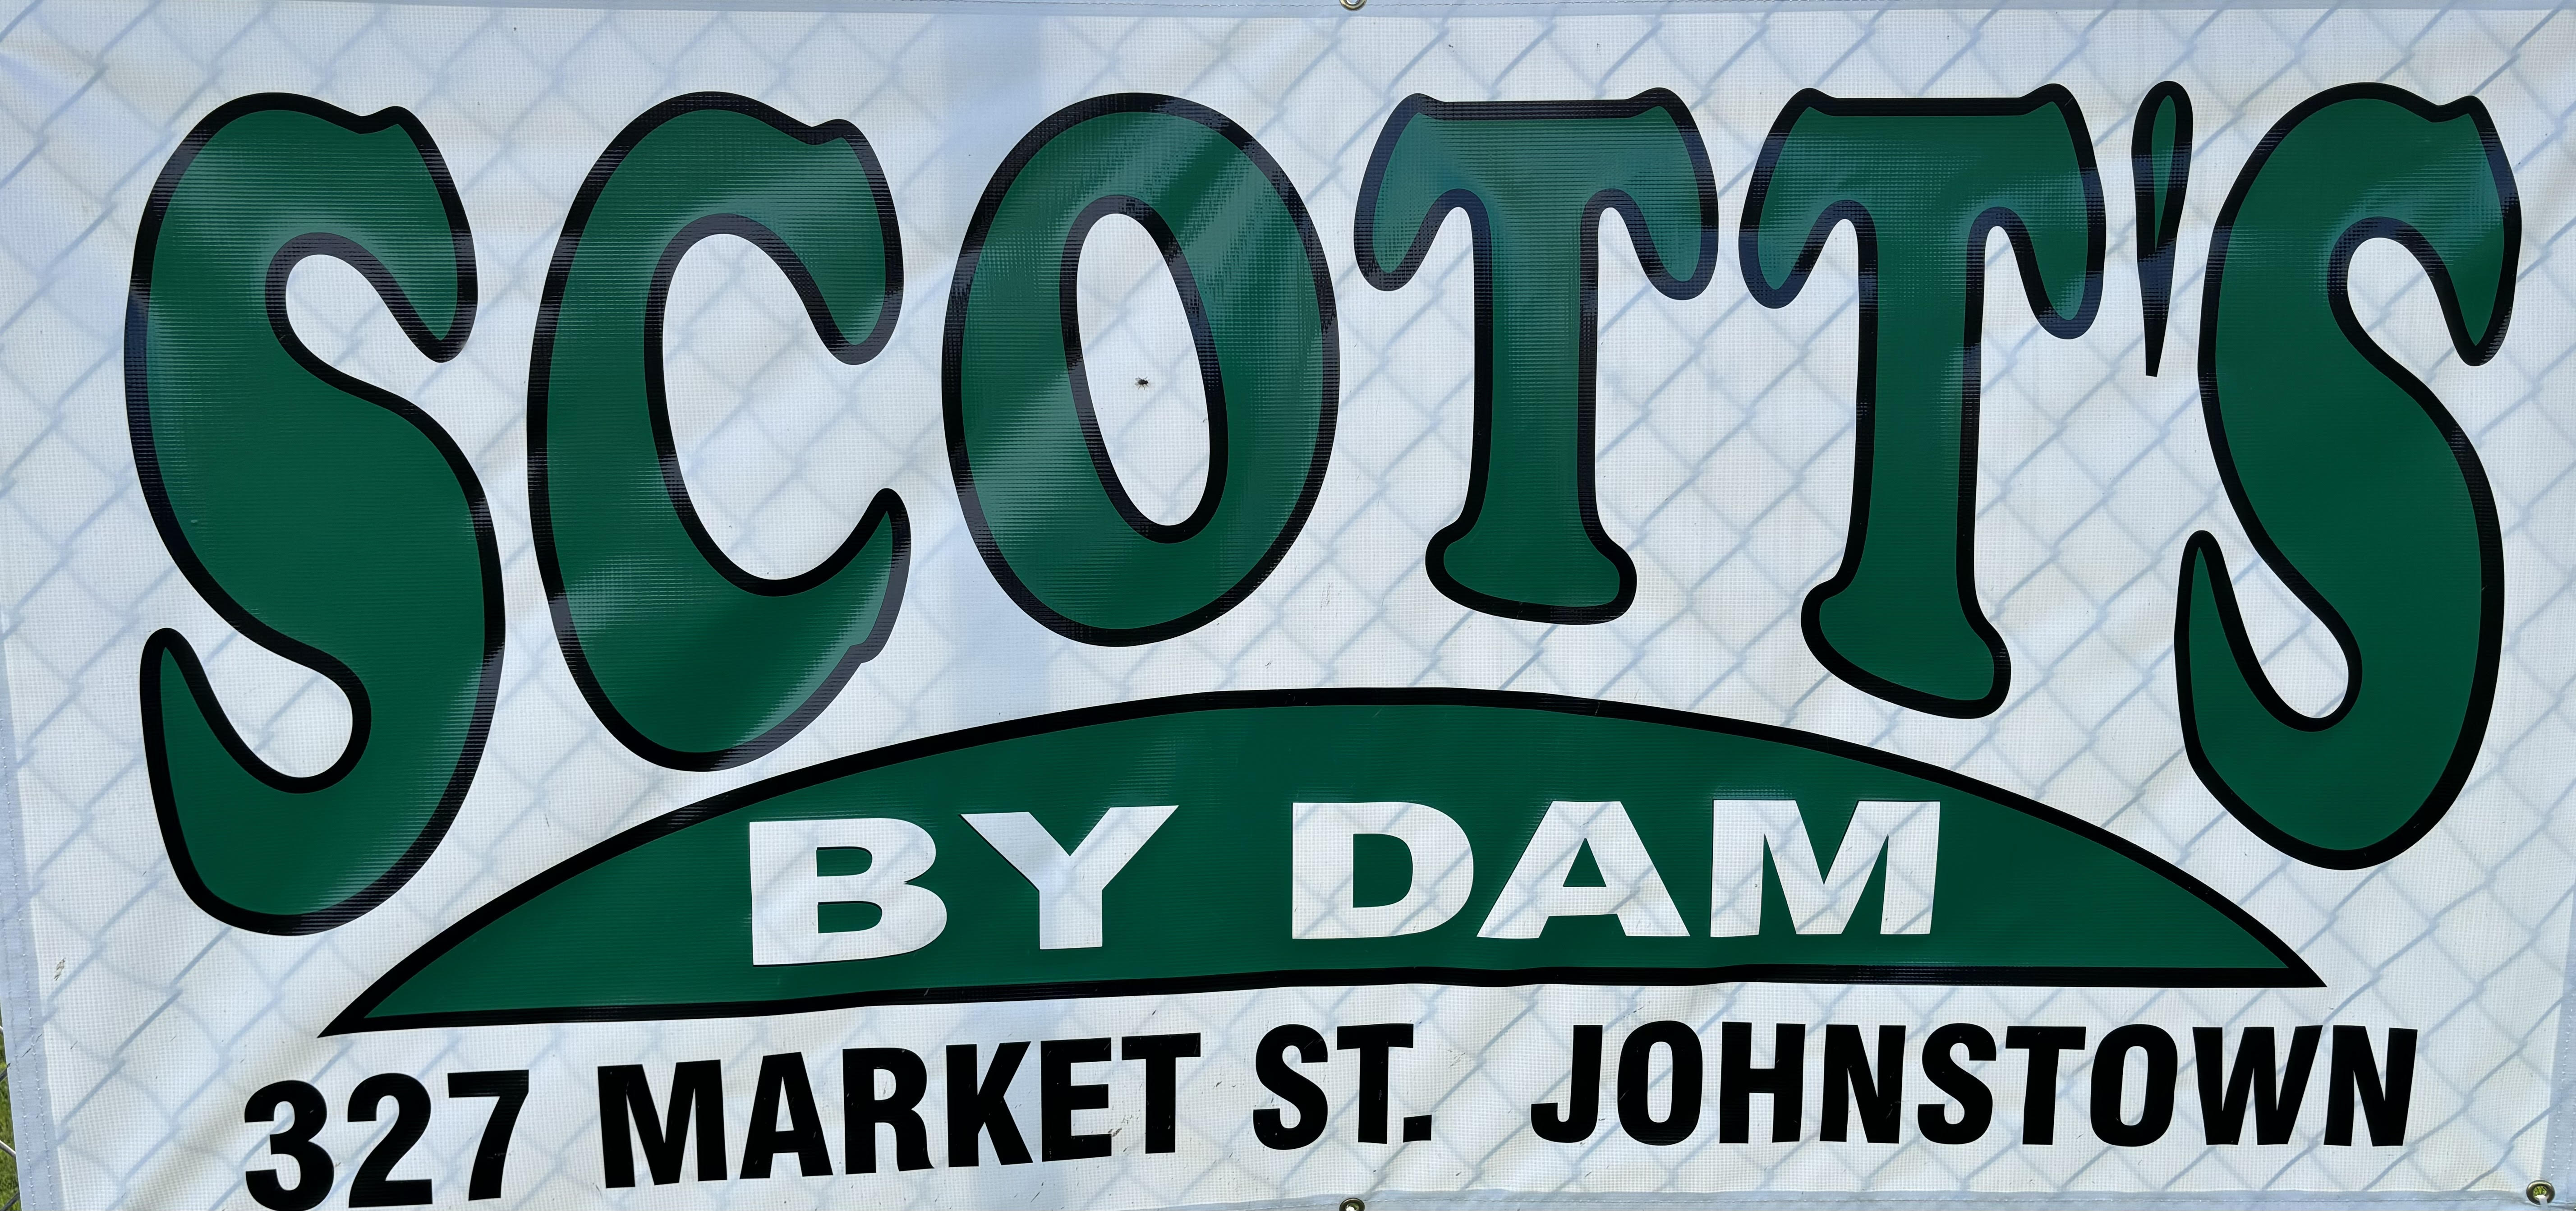 Scotts by Dam Sign.jpg